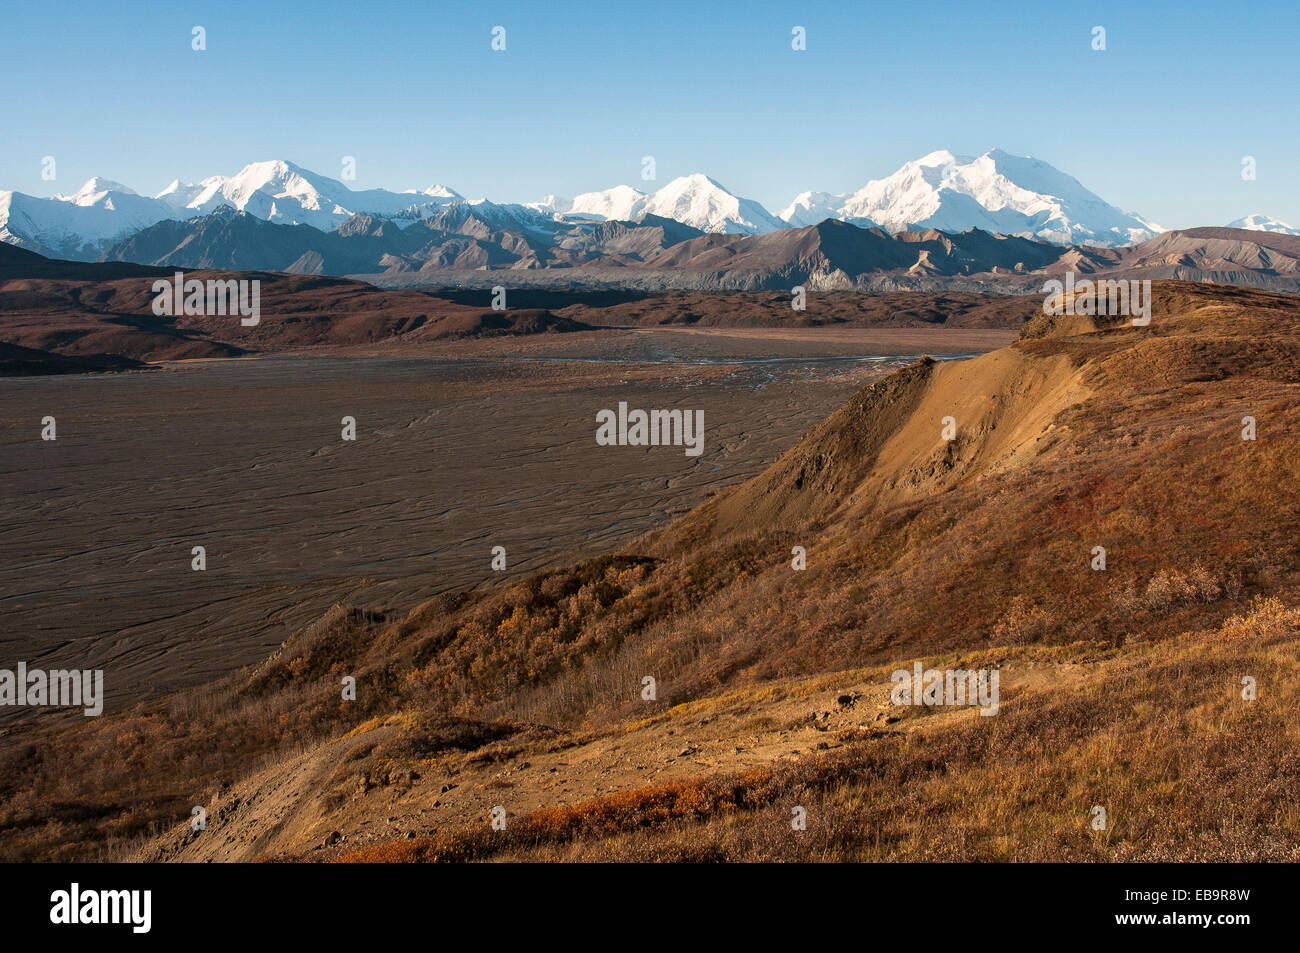 Alaska Range with Mount McKinley, Denali National Park, Alaska, United States Stock Photo